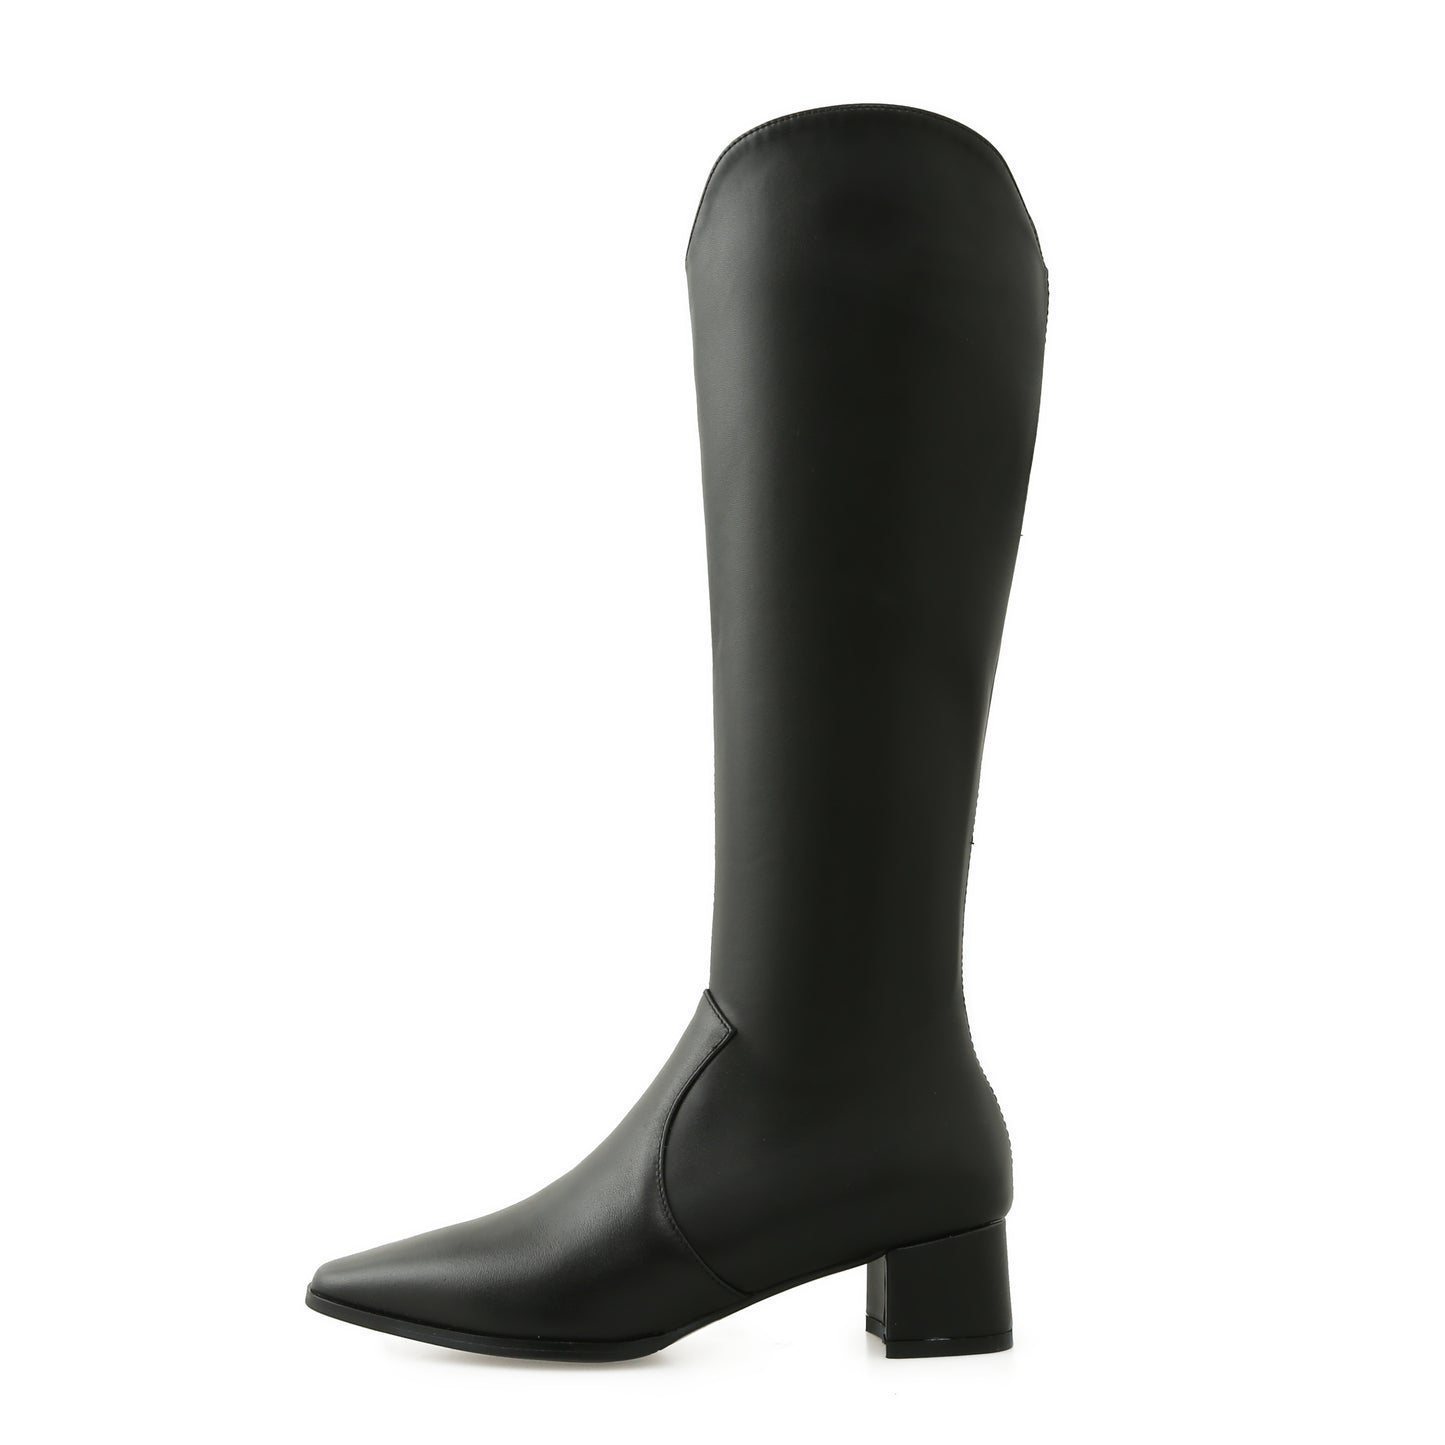 TinaCus Women's Handmade Leather Comfortable Chunky Heel Side Half Zipper Round Toe Knee-High Boots